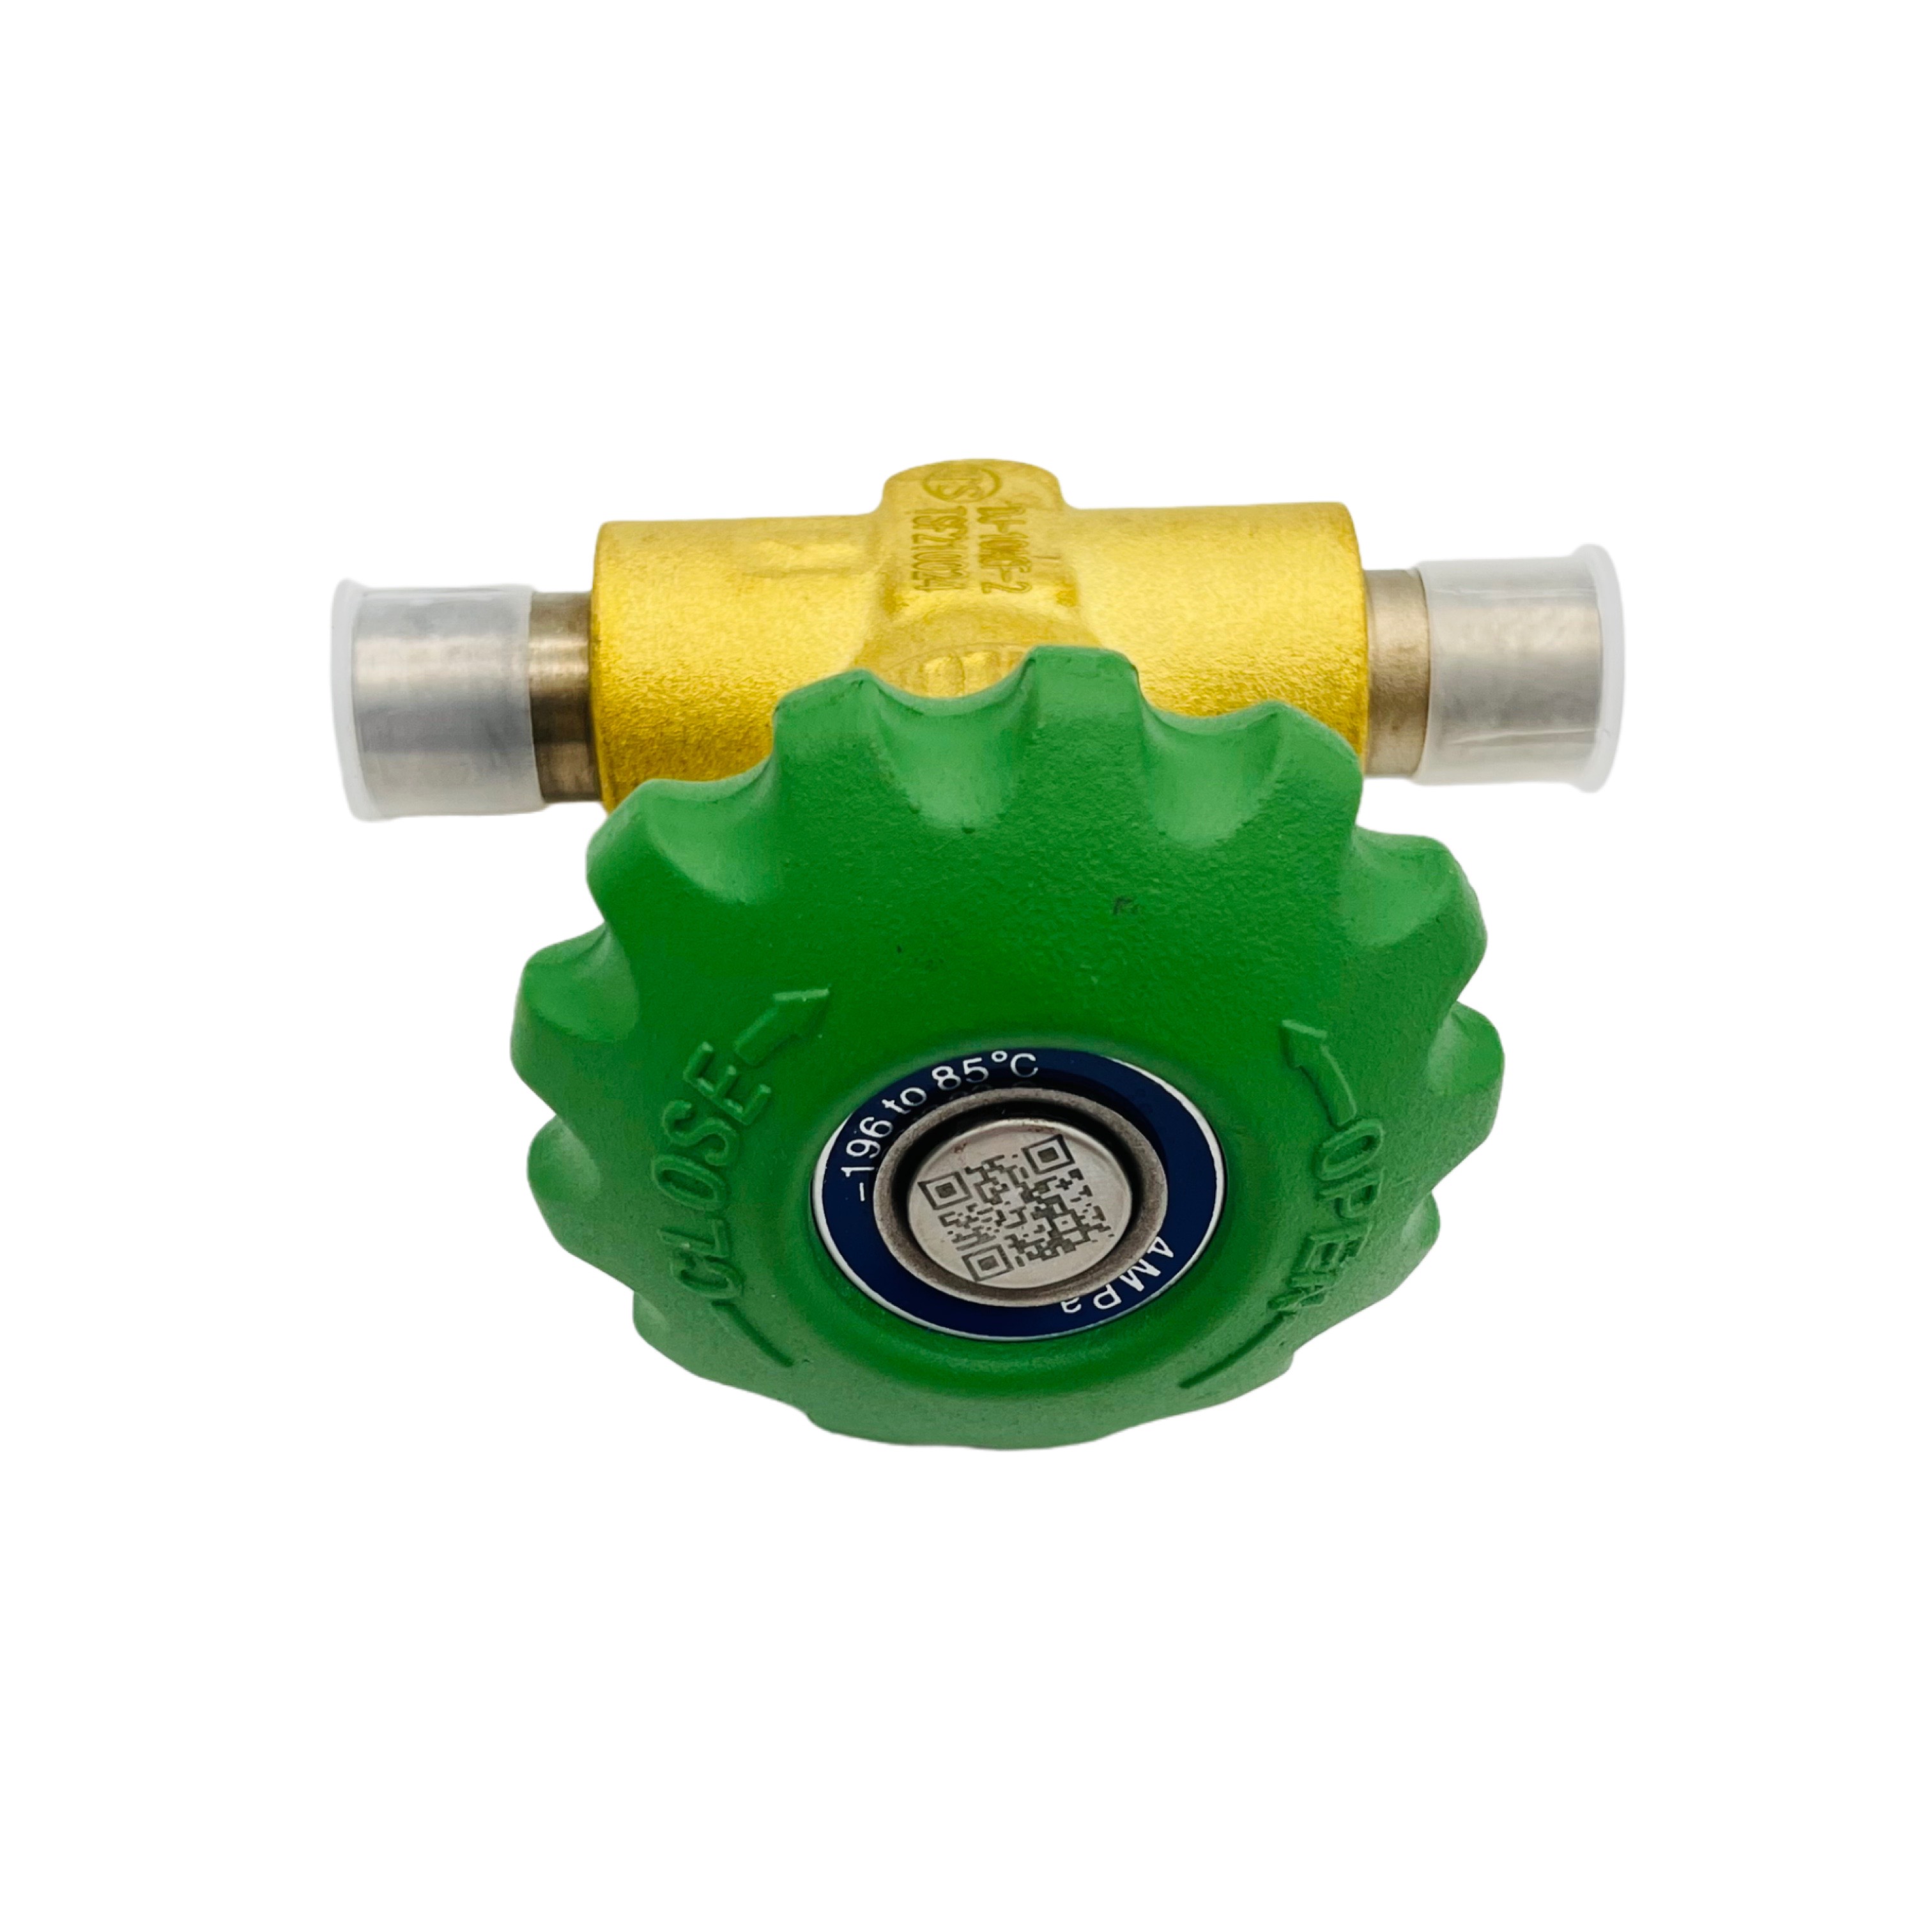 DJ-10ACF-2 Green Handwheel Short Stem Cryogenic Globe Valve